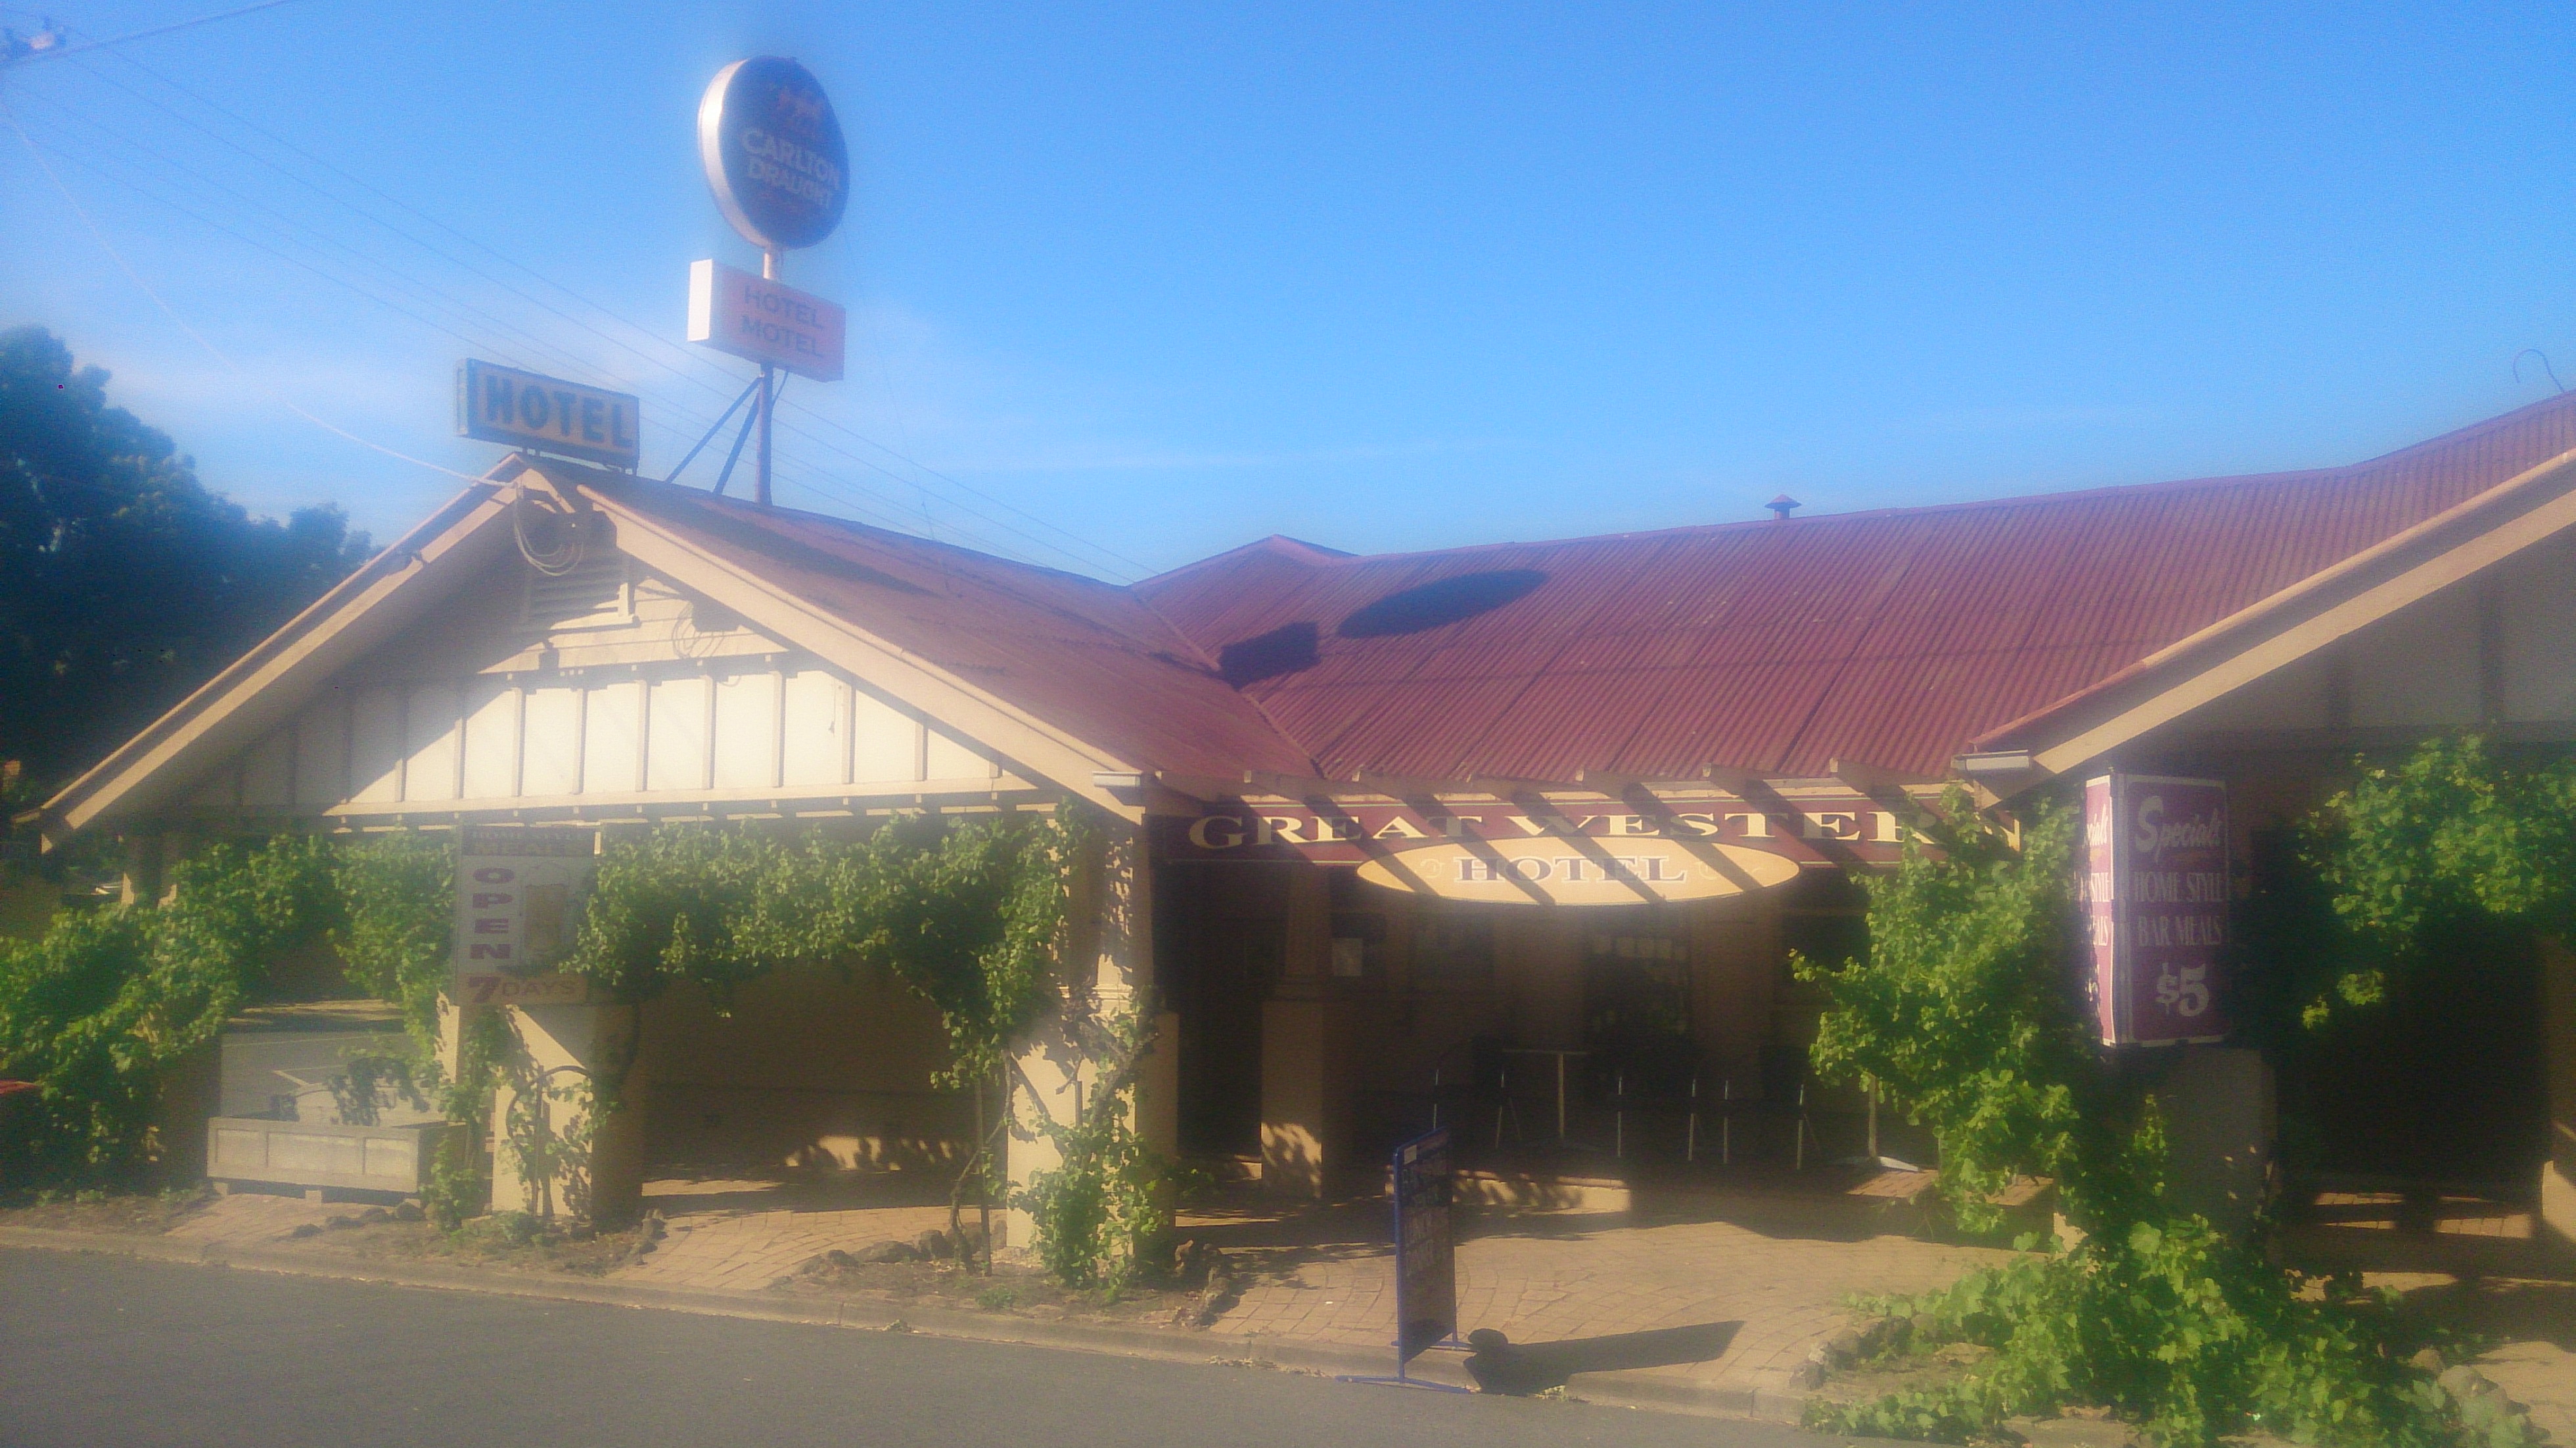 Great Western Hotel Motel - Port Augusta Accommodation